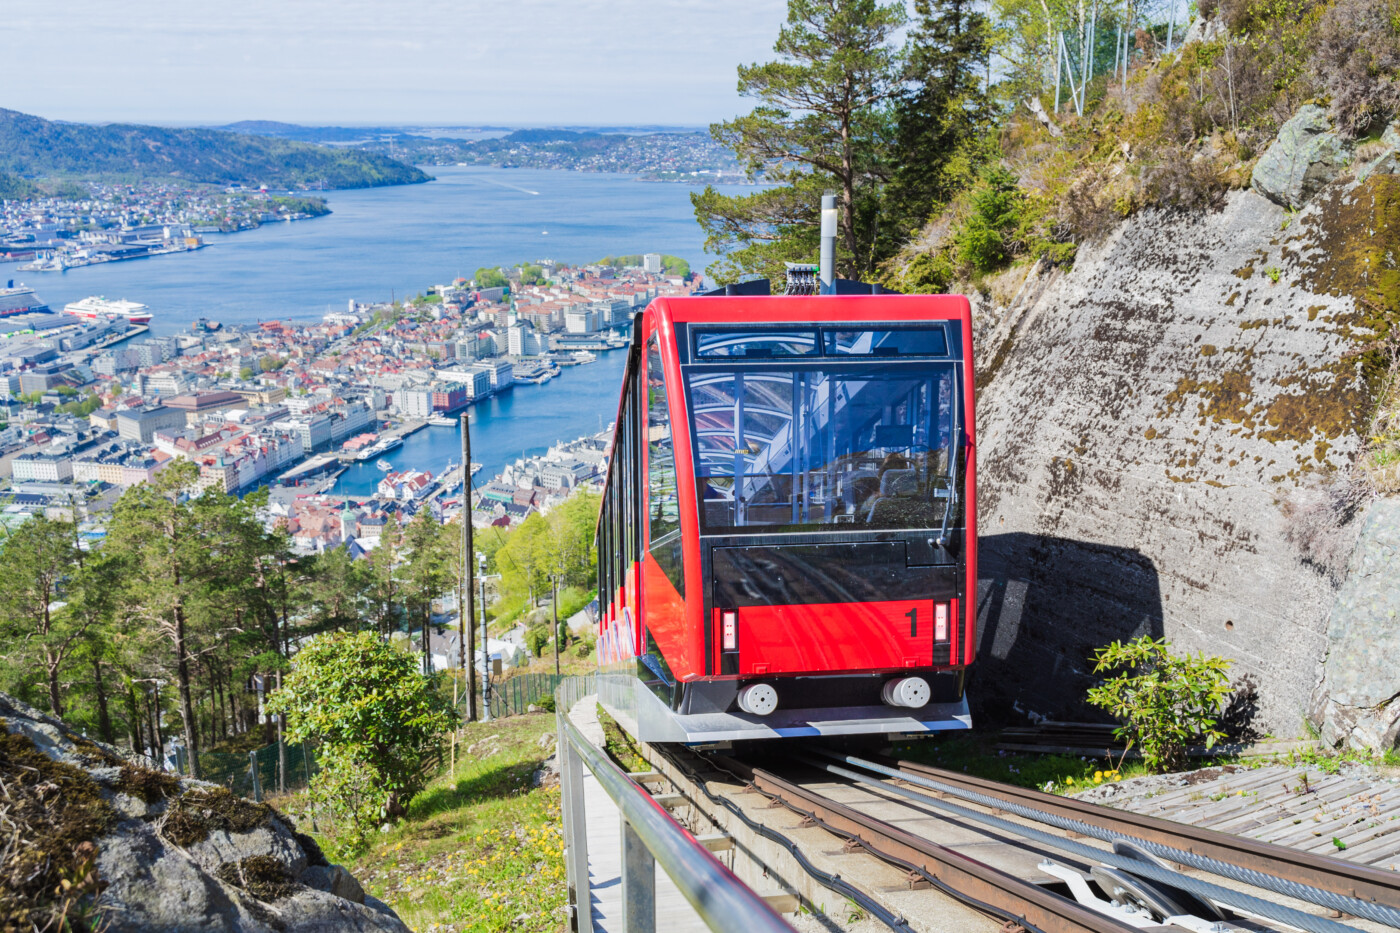 Fløybanen in Bergen - Photo by Casper Steinsland - Visit Bergen